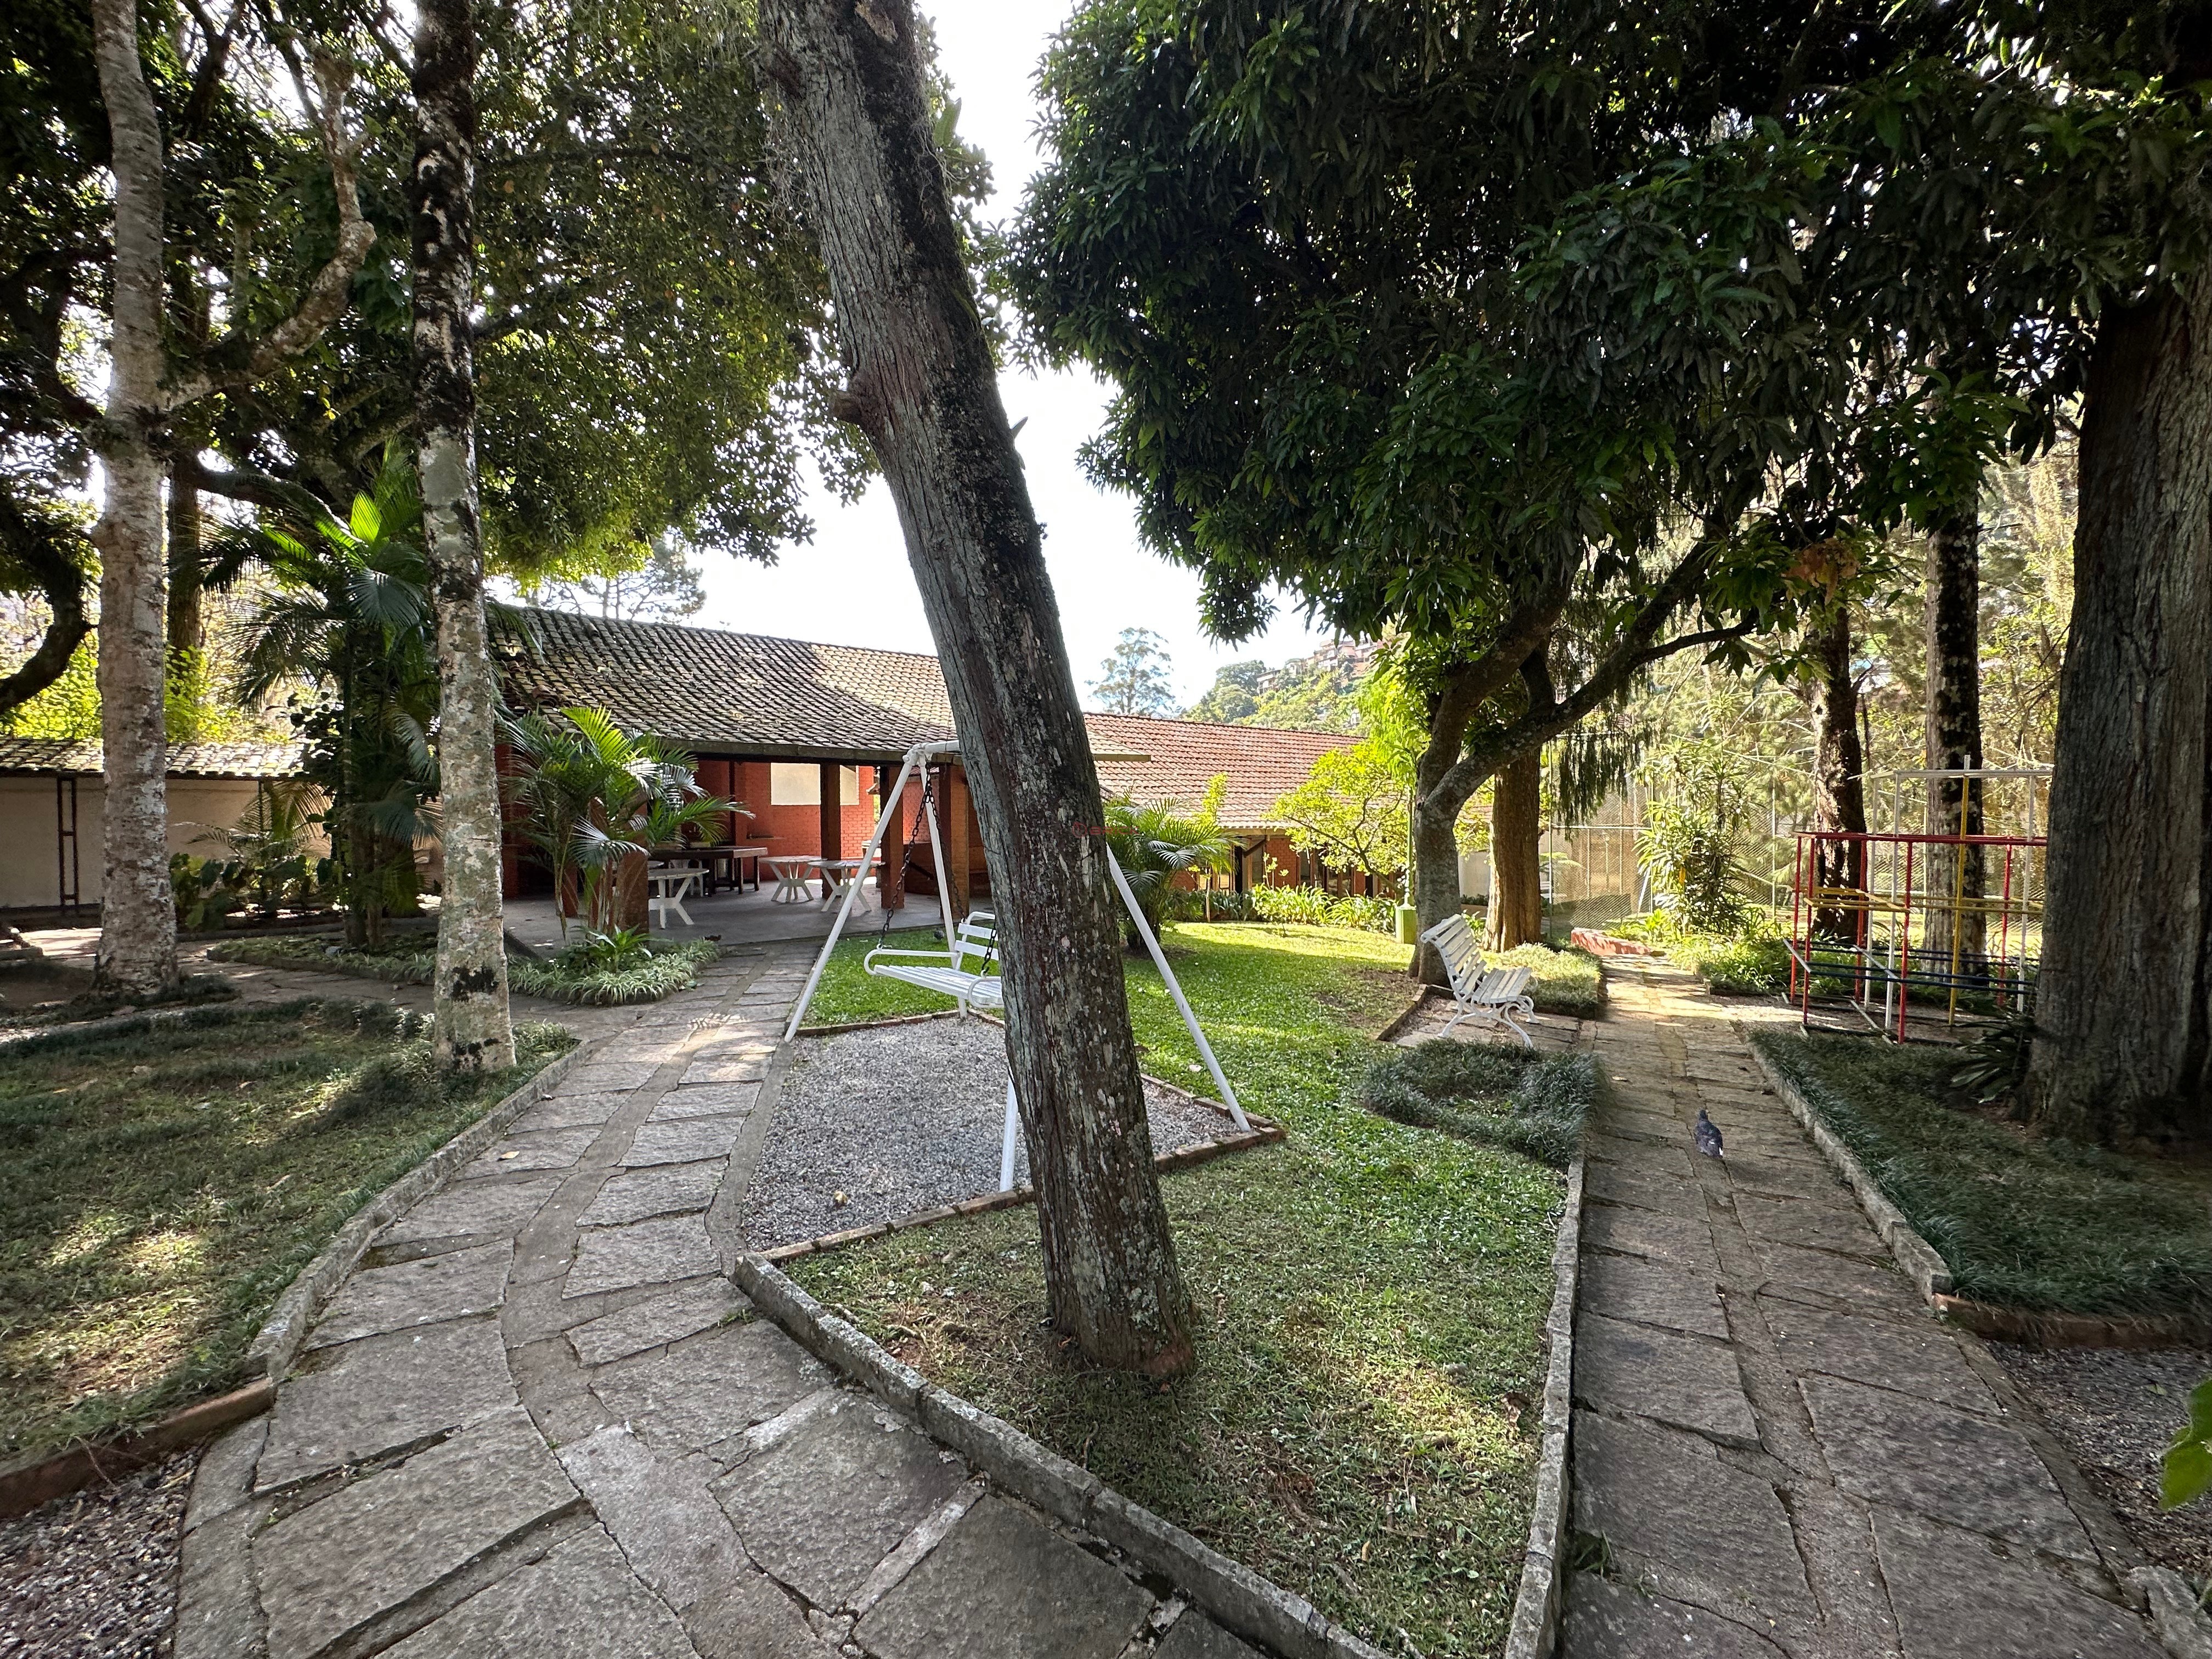 Casa à venda em Alto, Teresópolis - RJ - Foto 42